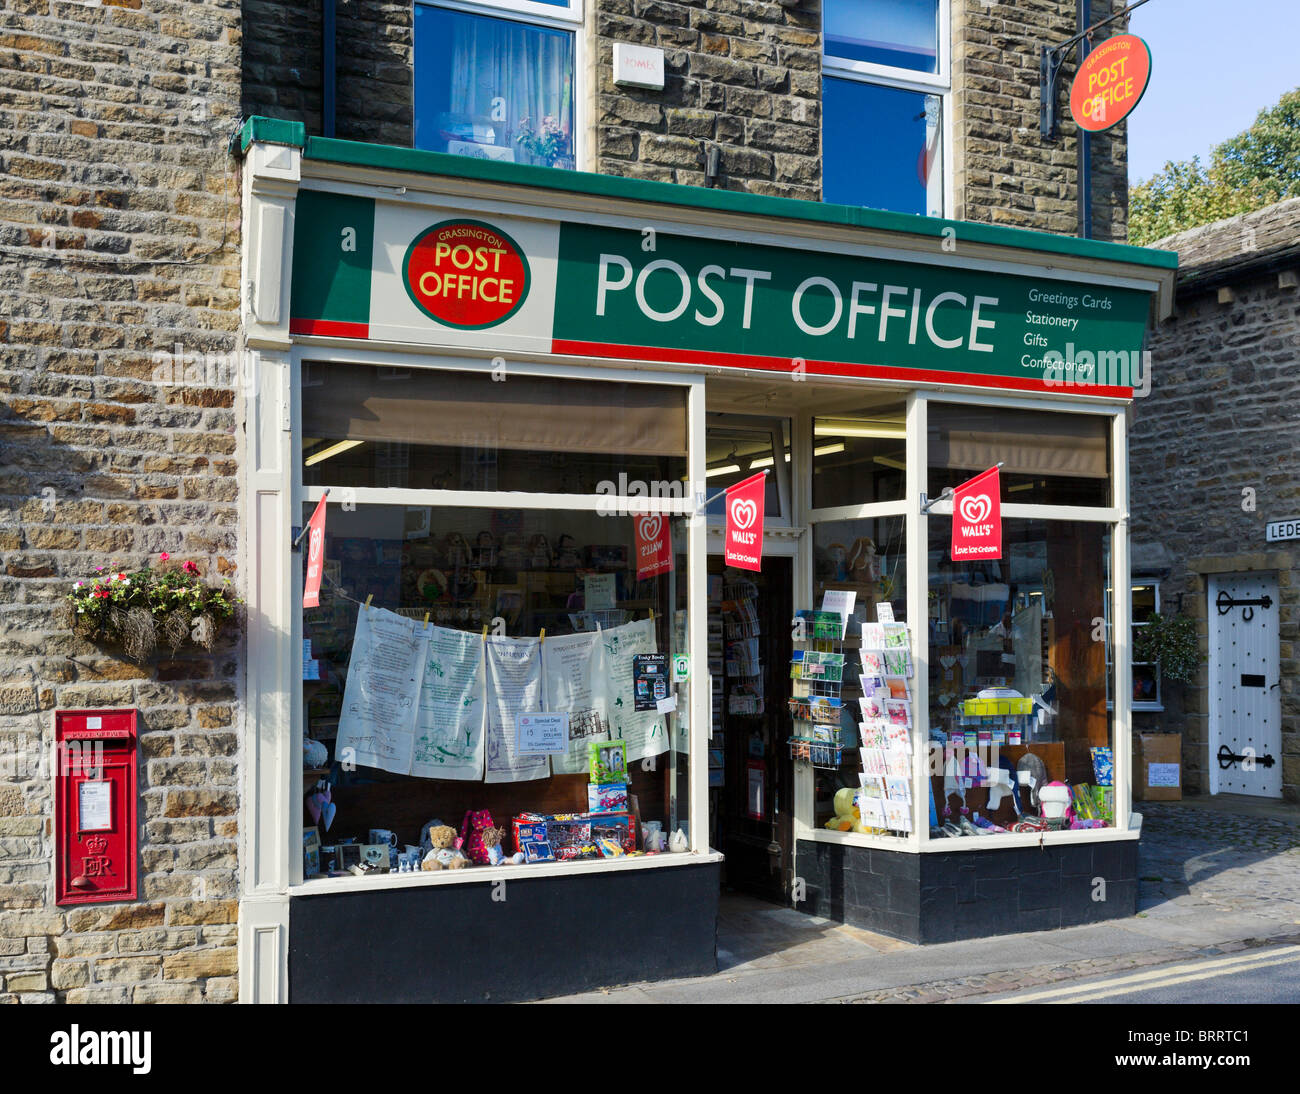 Oficina postal fotografías e imágenes de alta resolución - Alamy